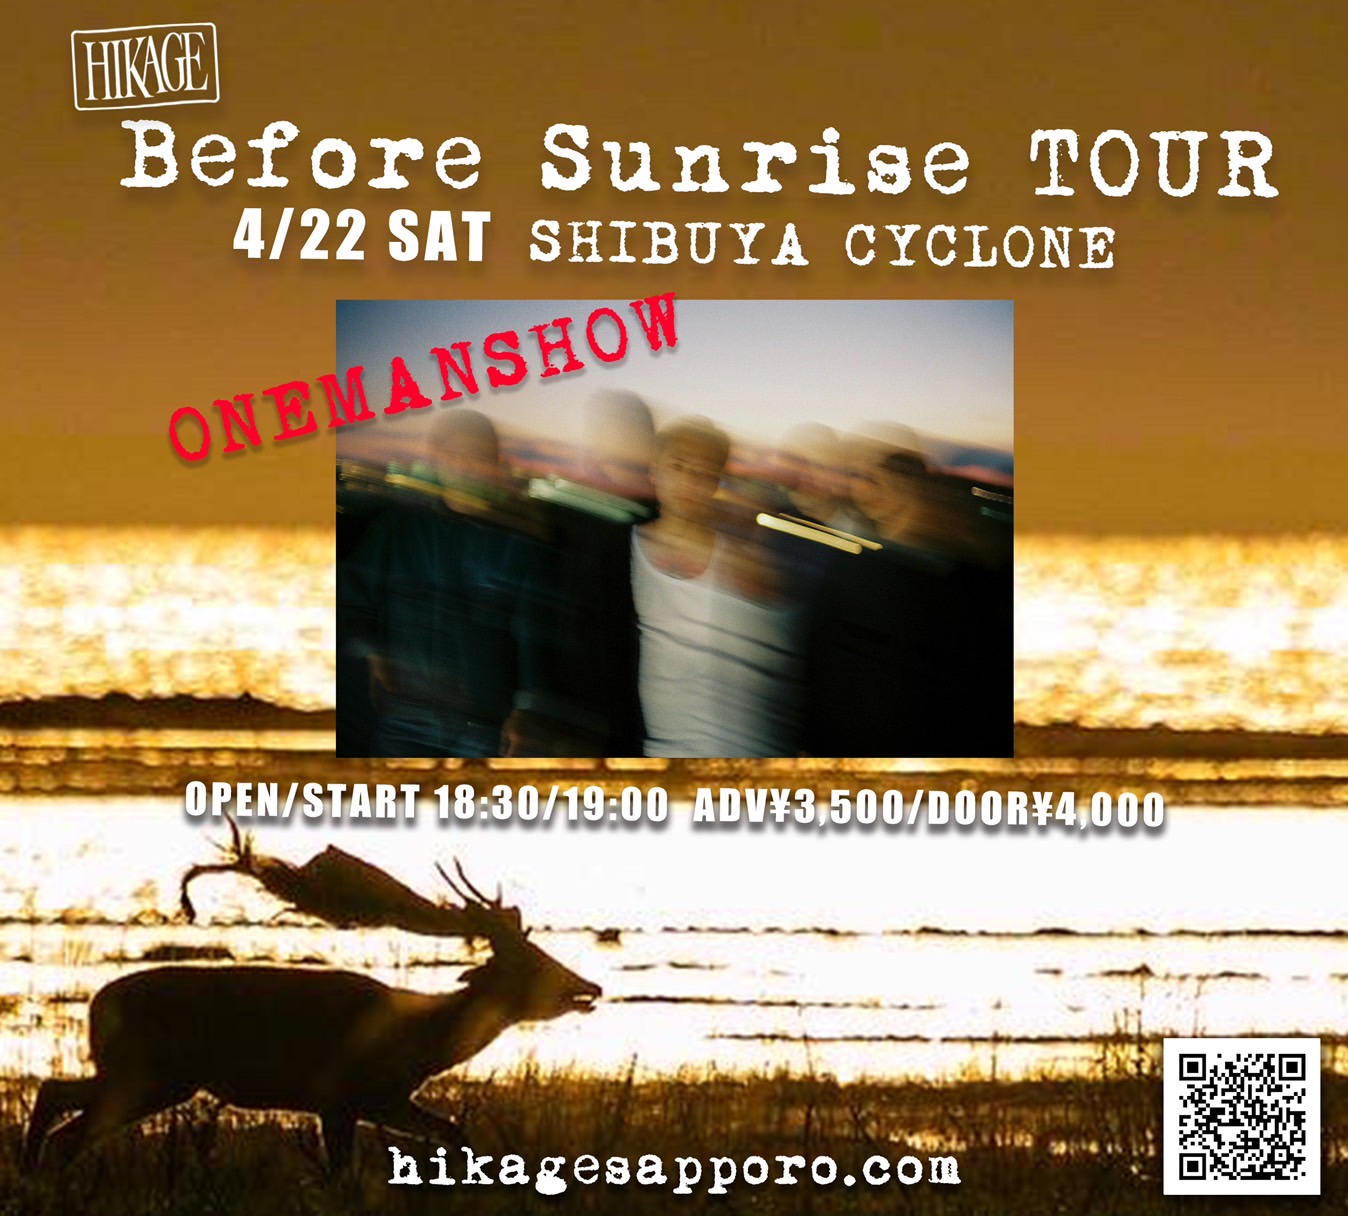 " Before Sunrise TOUR " HIKAGE ONE MAN SHOW